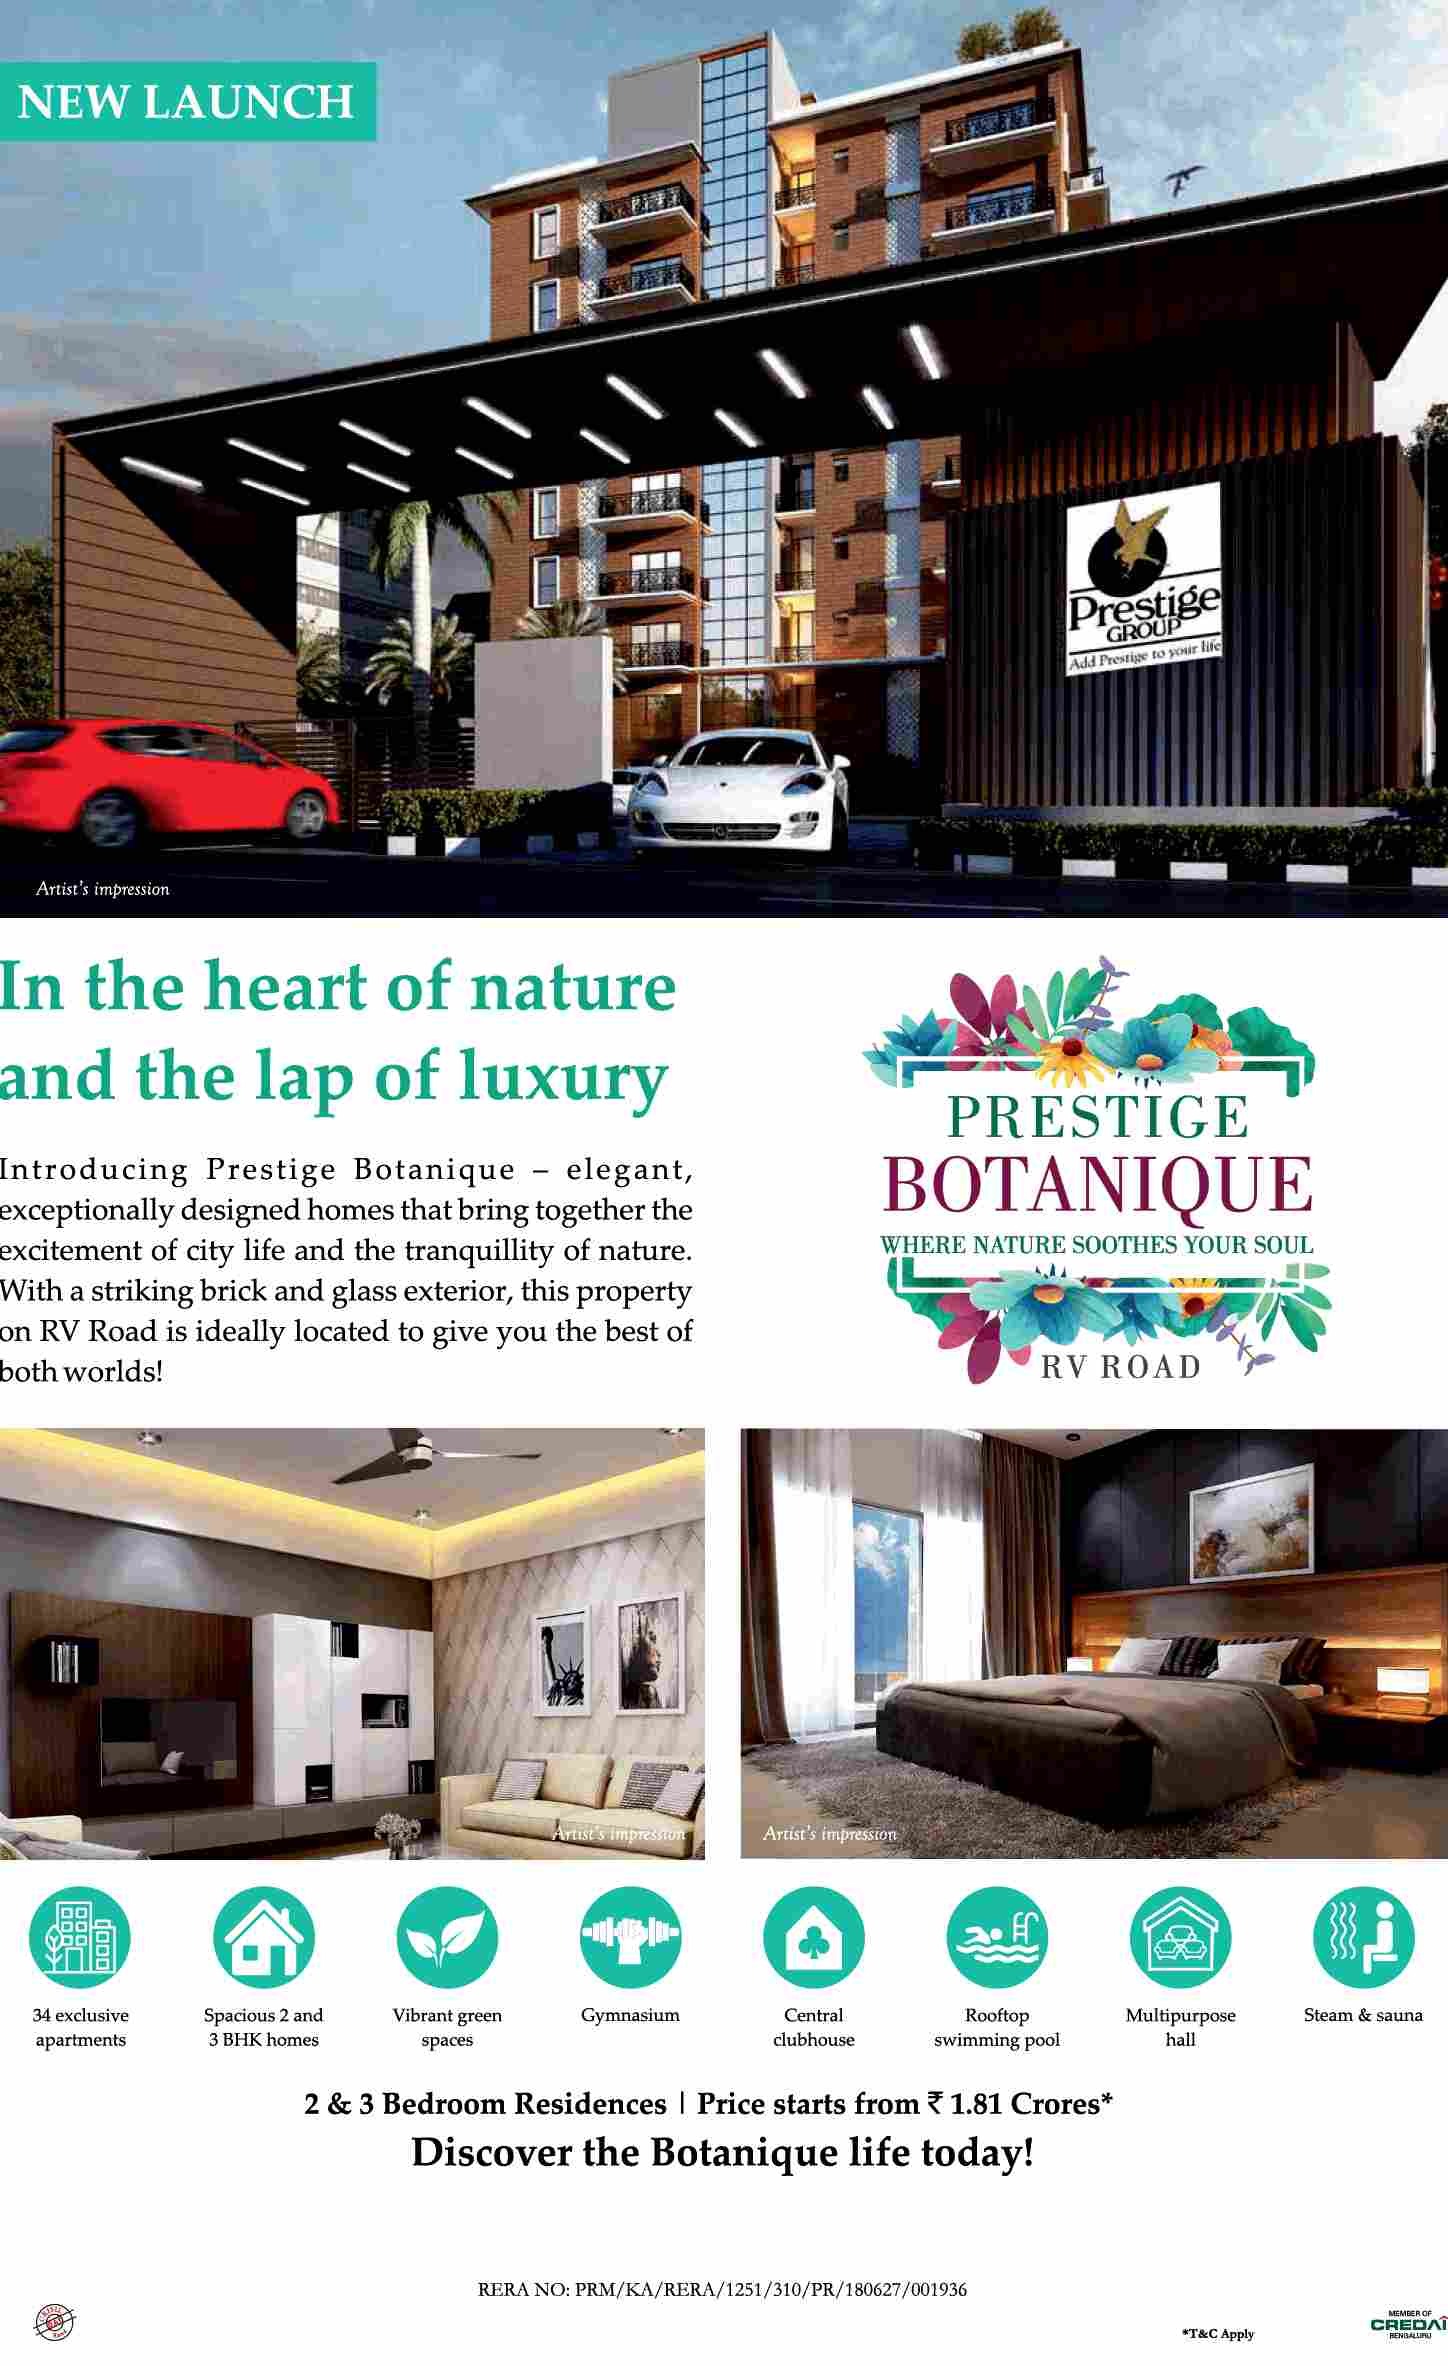 Book 2 & 3 bedroom residences @ Rs 1.81 cr at Prestige Botanique in Bangalore